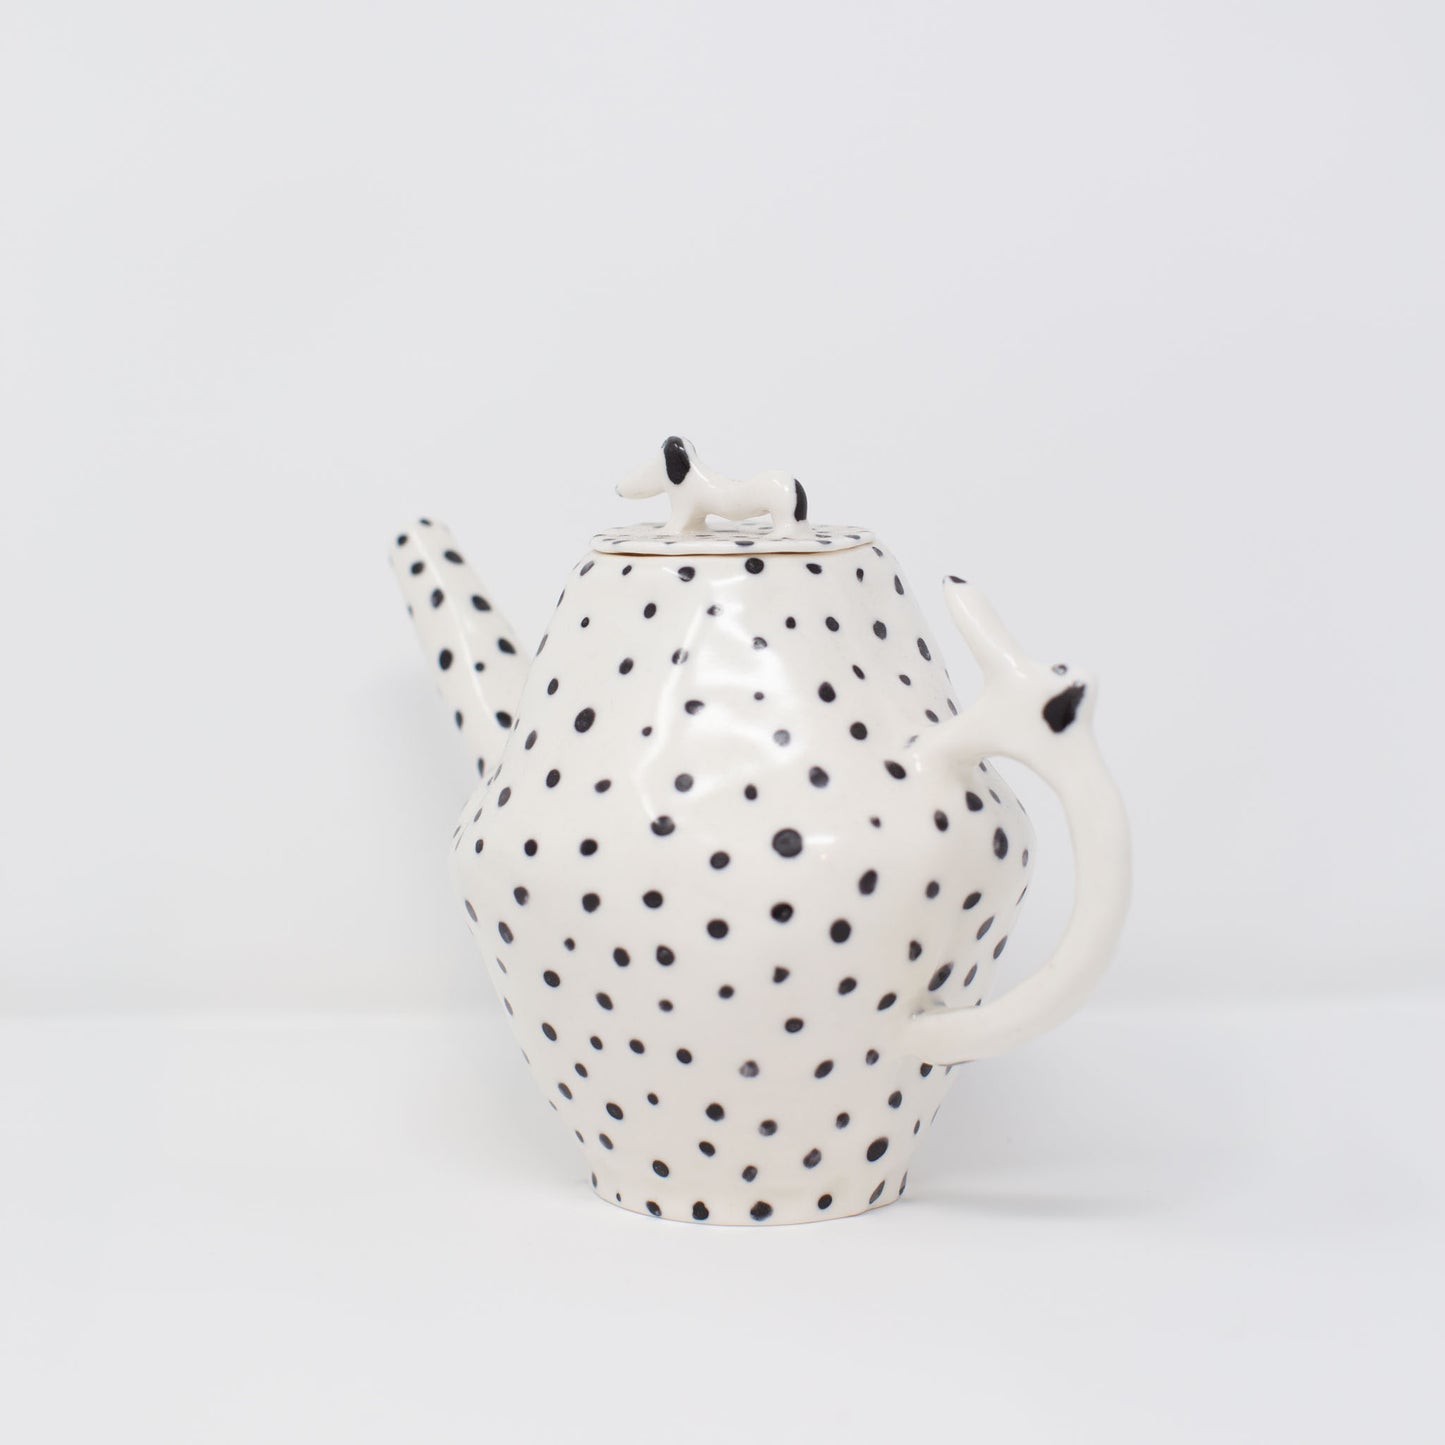 (20% off) Polka Dot Dog Teapot by Eleonor Bostrom